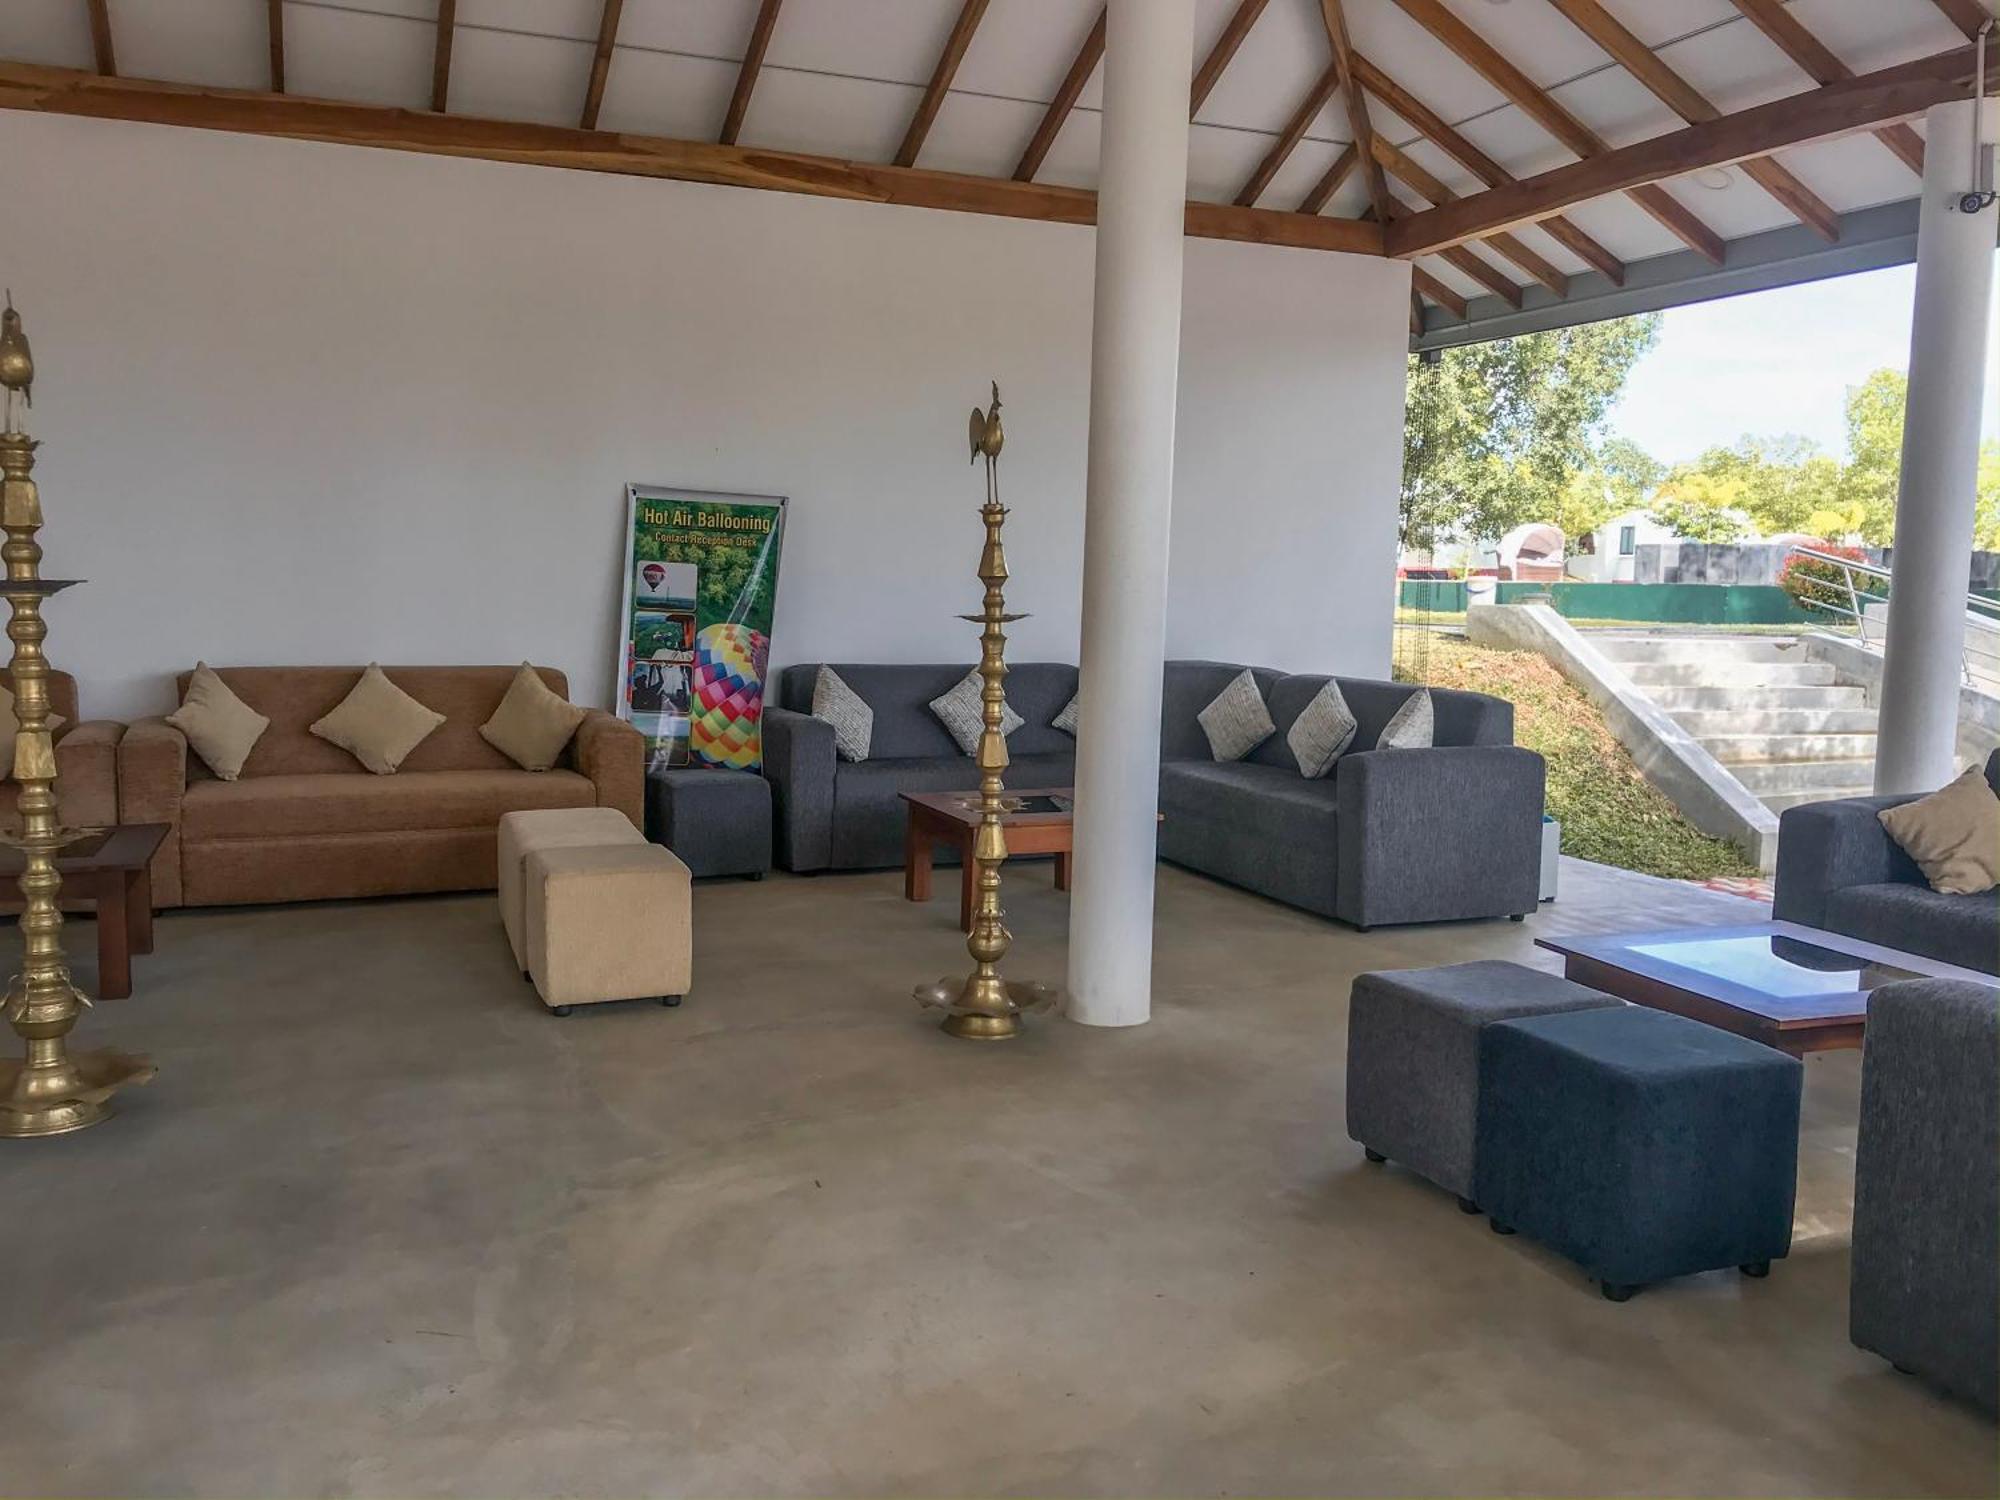 The Lion Kingdom Sigiriya Ξενοδοχείο Εξωτερικό φωτογραφία